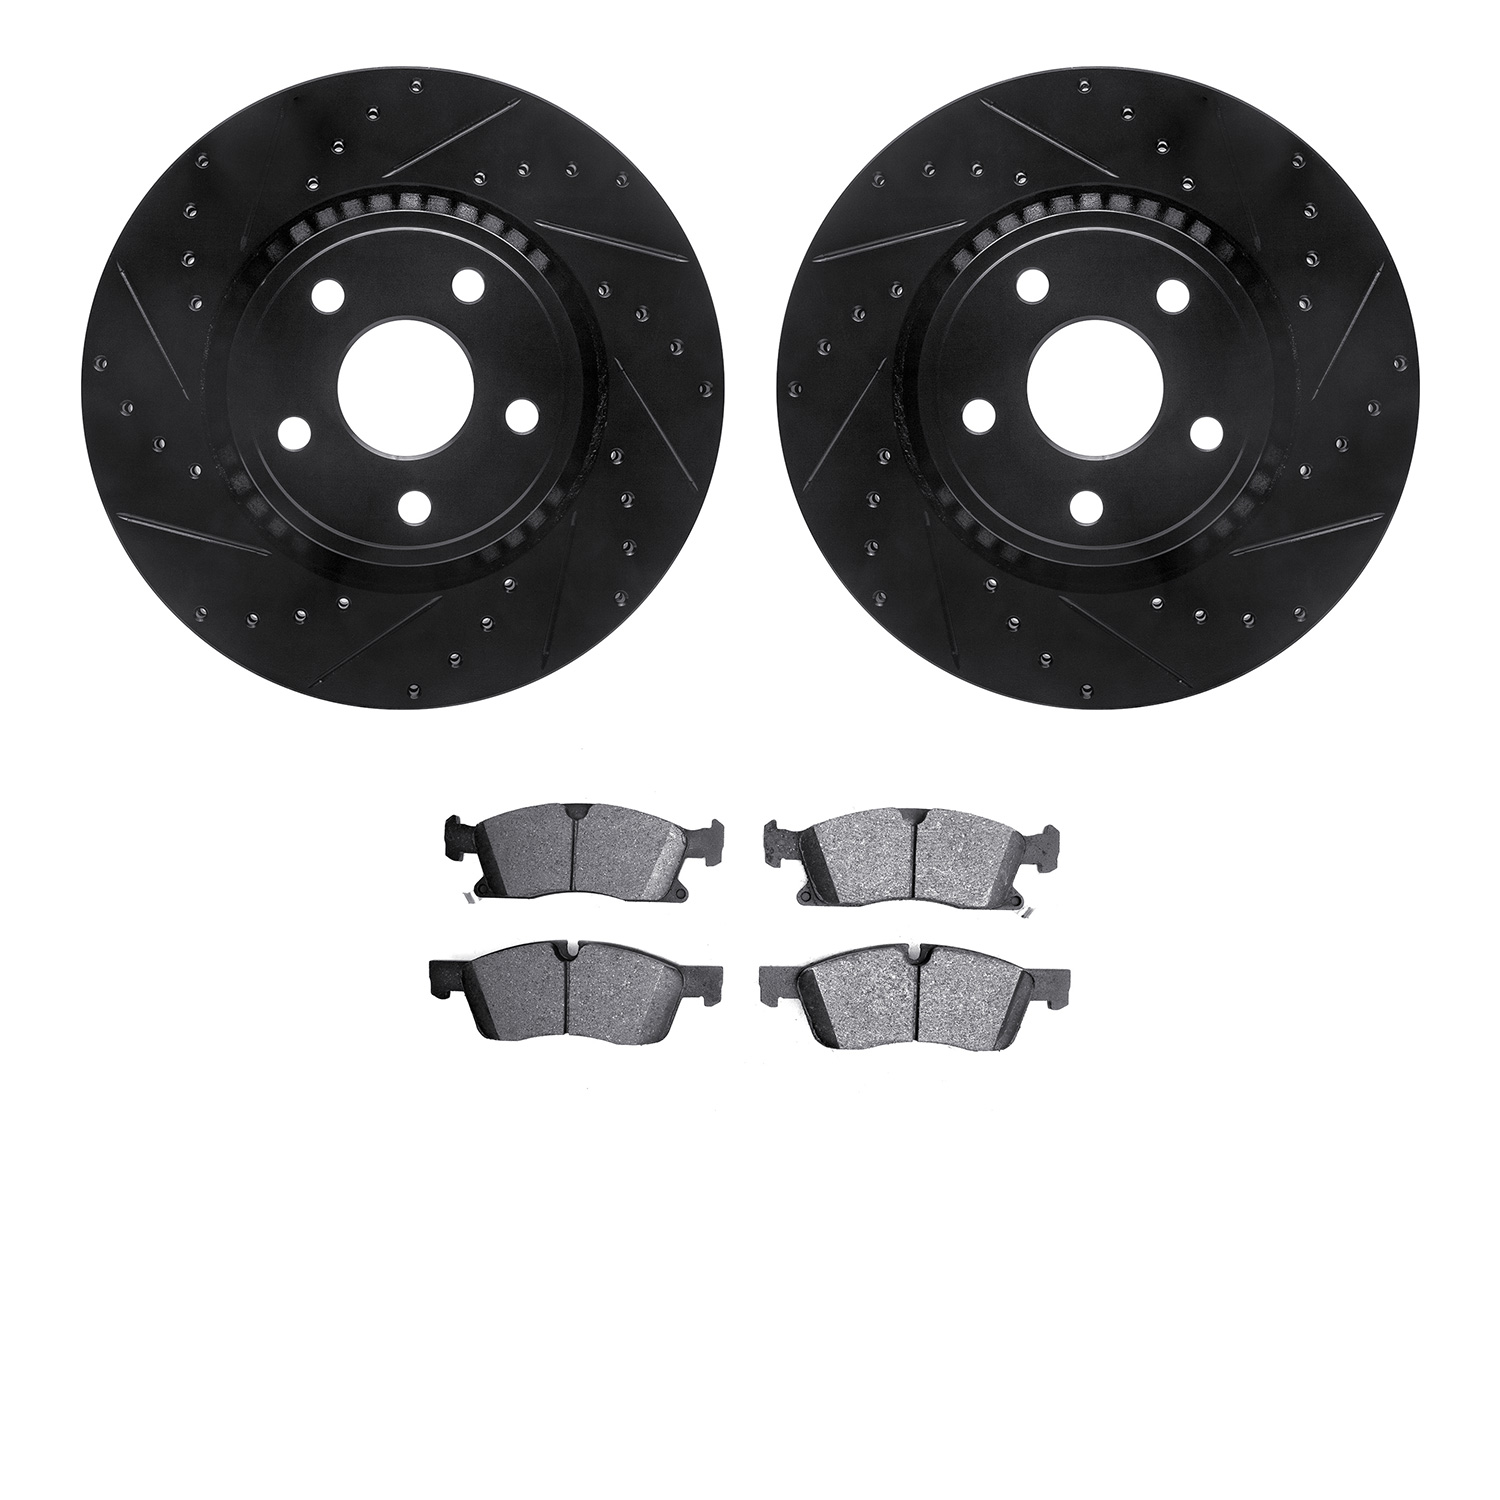 8302-42051 Drilled/Slotted Brake Rotors with 3000-Series Ceramic Brake Pads Kit [Black], Fits Select Mopar, Position: Front